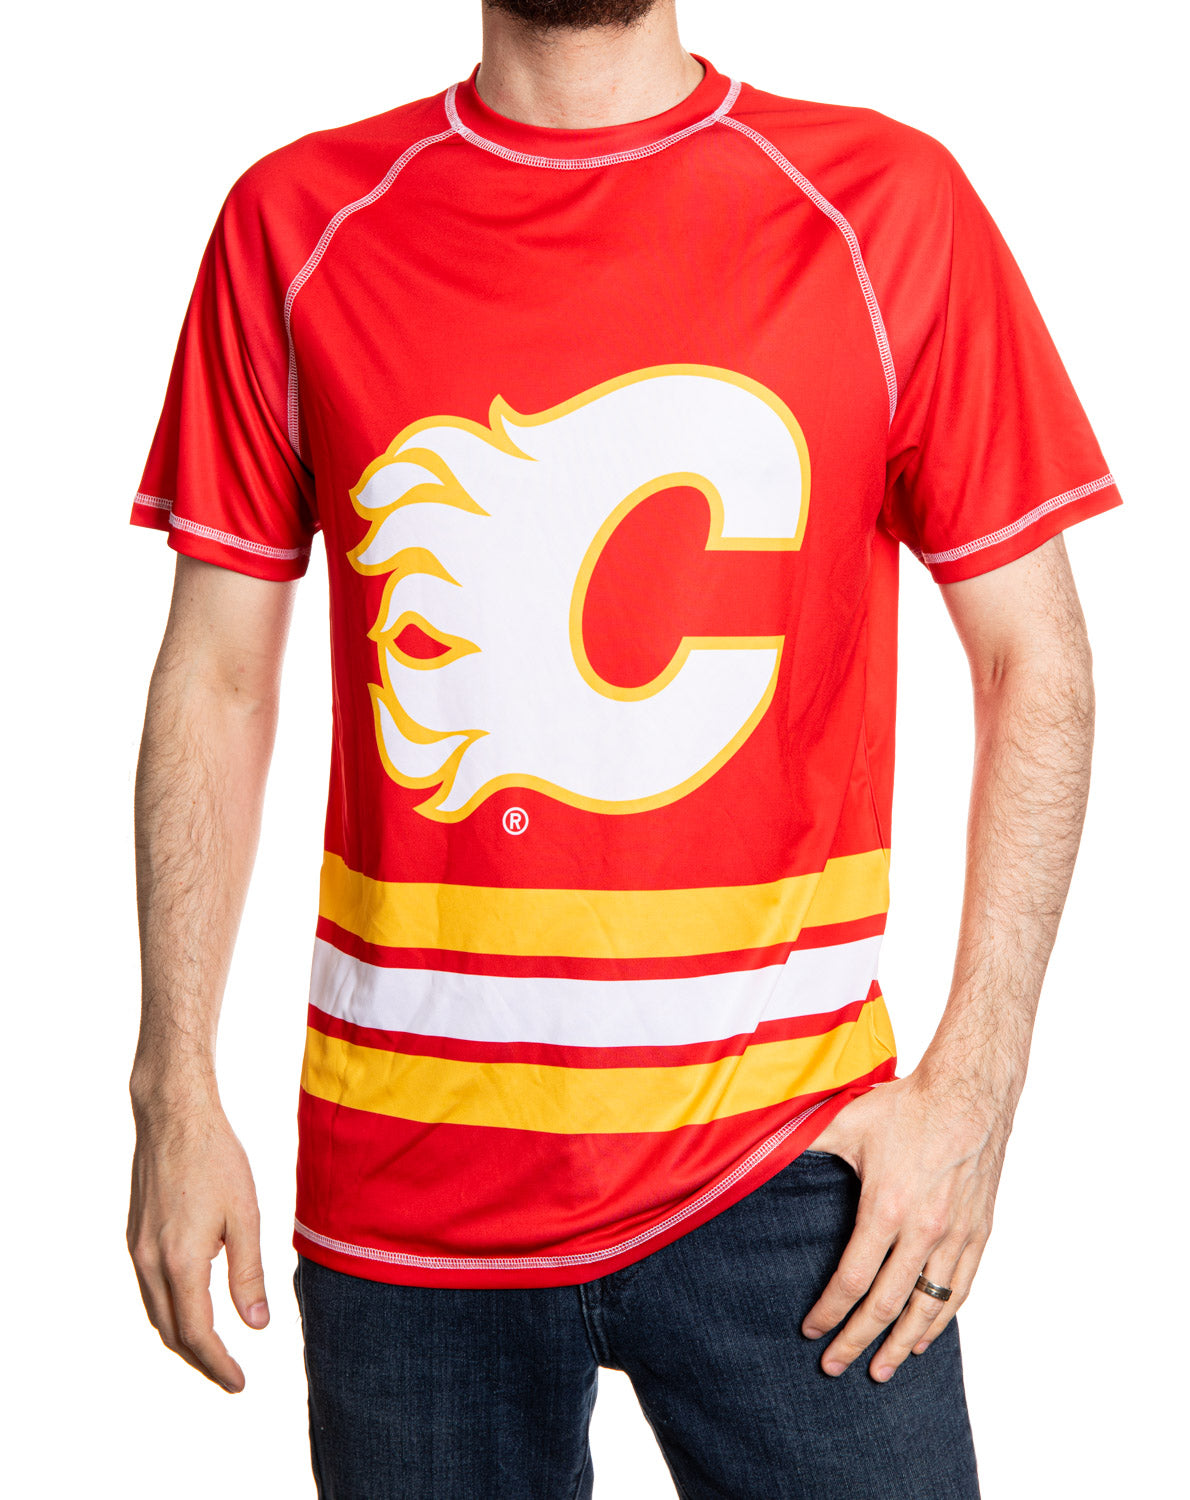 Calgary Flames Short Sleeve Game Day Rashguard